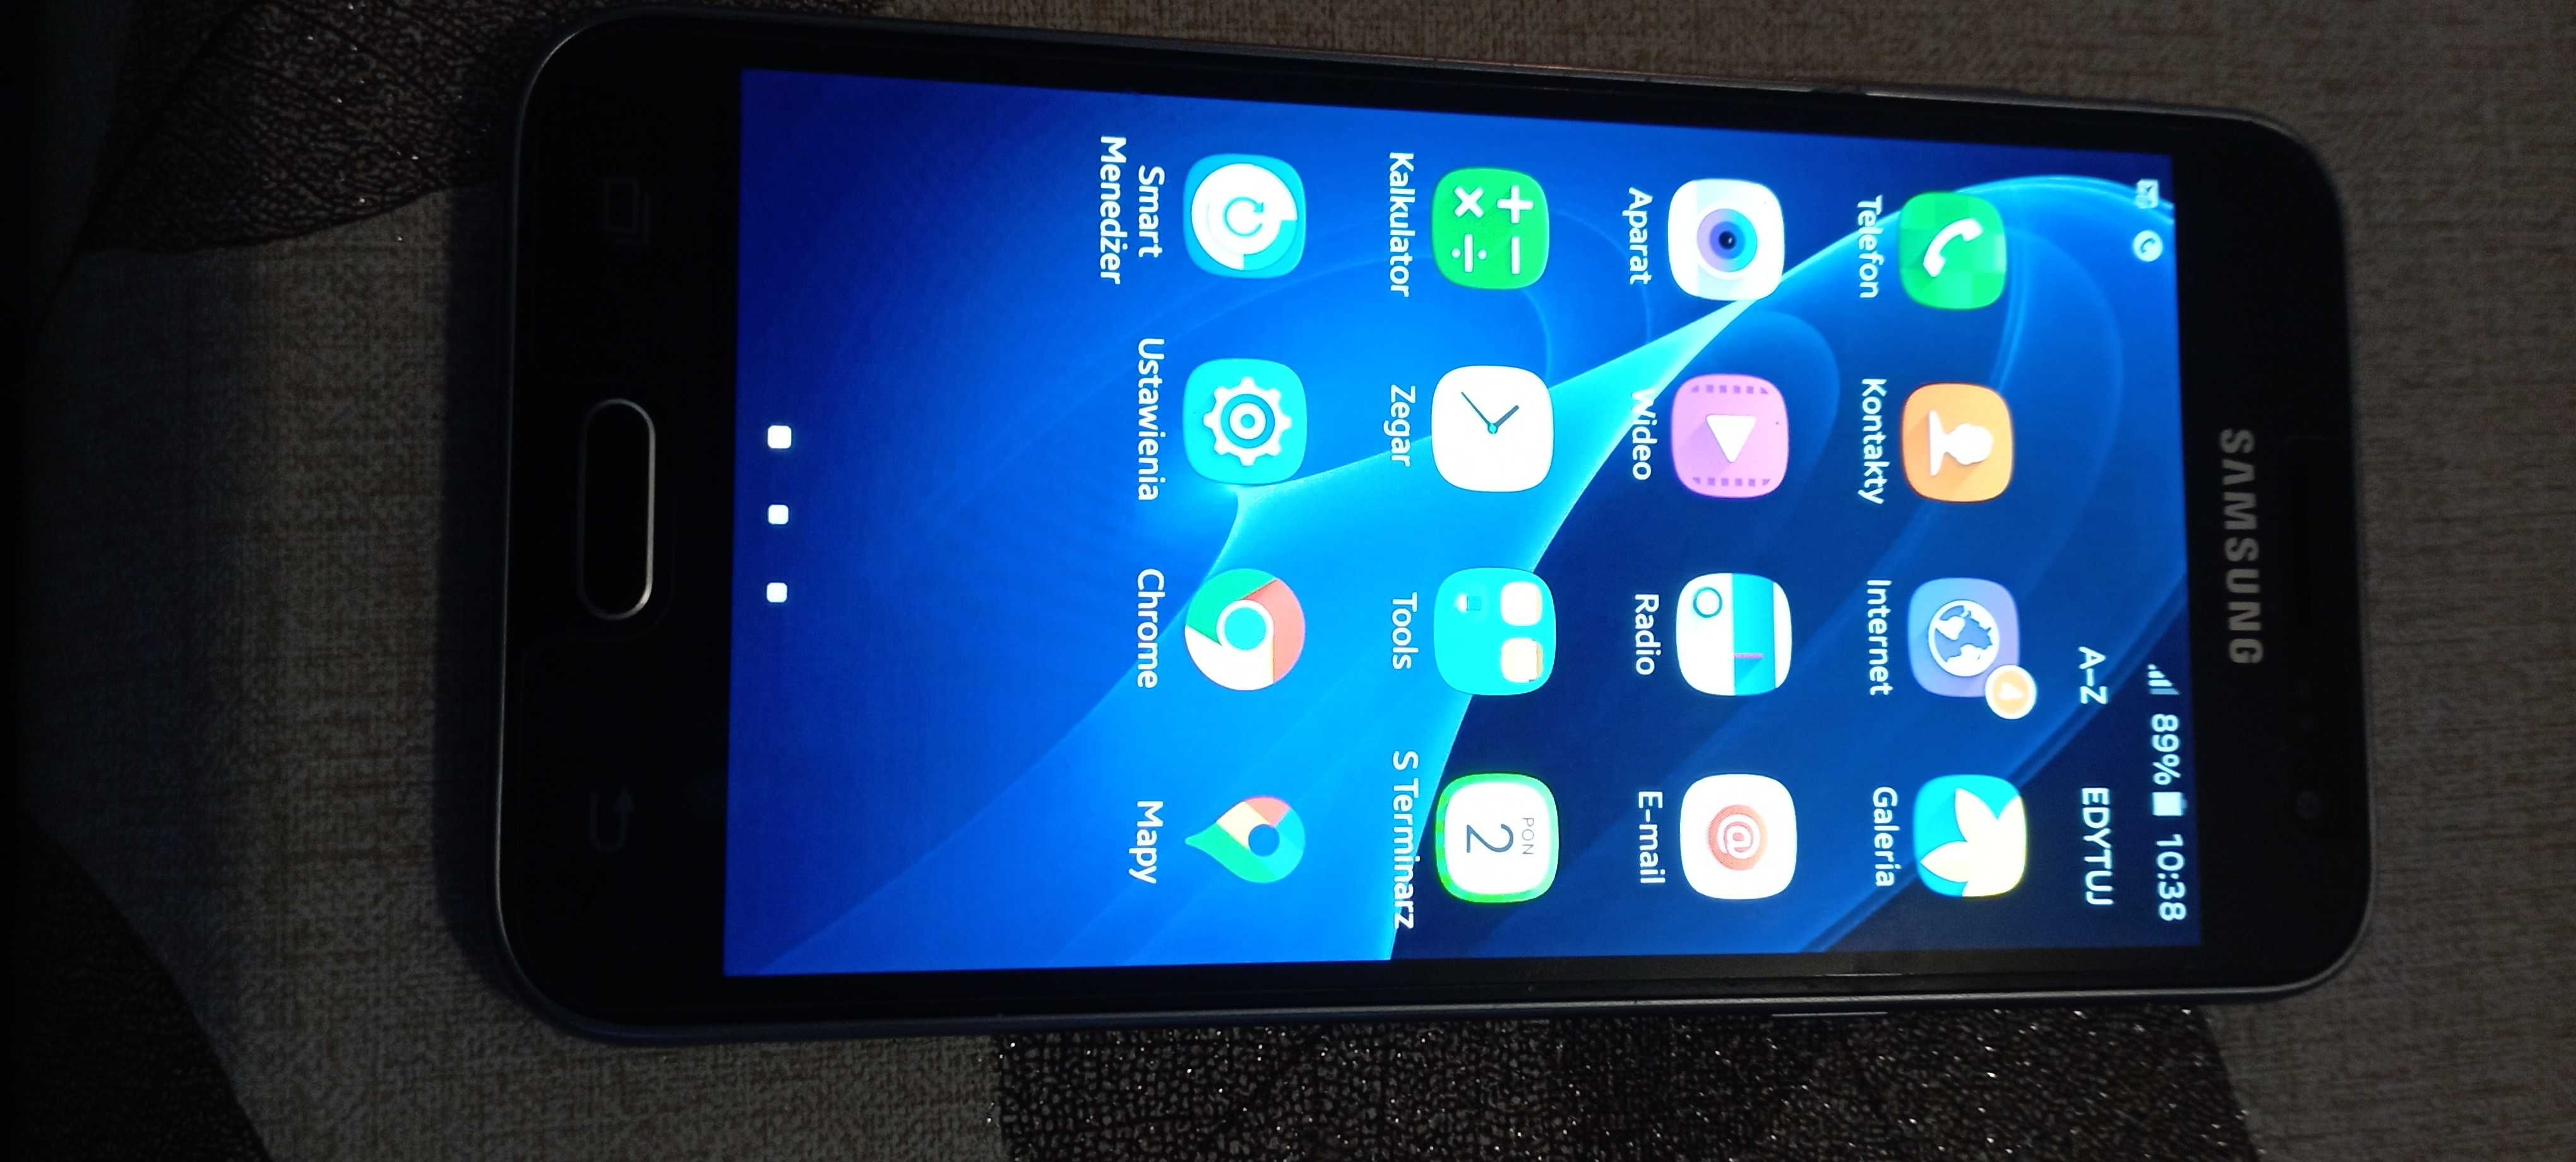 Samsung Galaxy J 3 Dual SIM